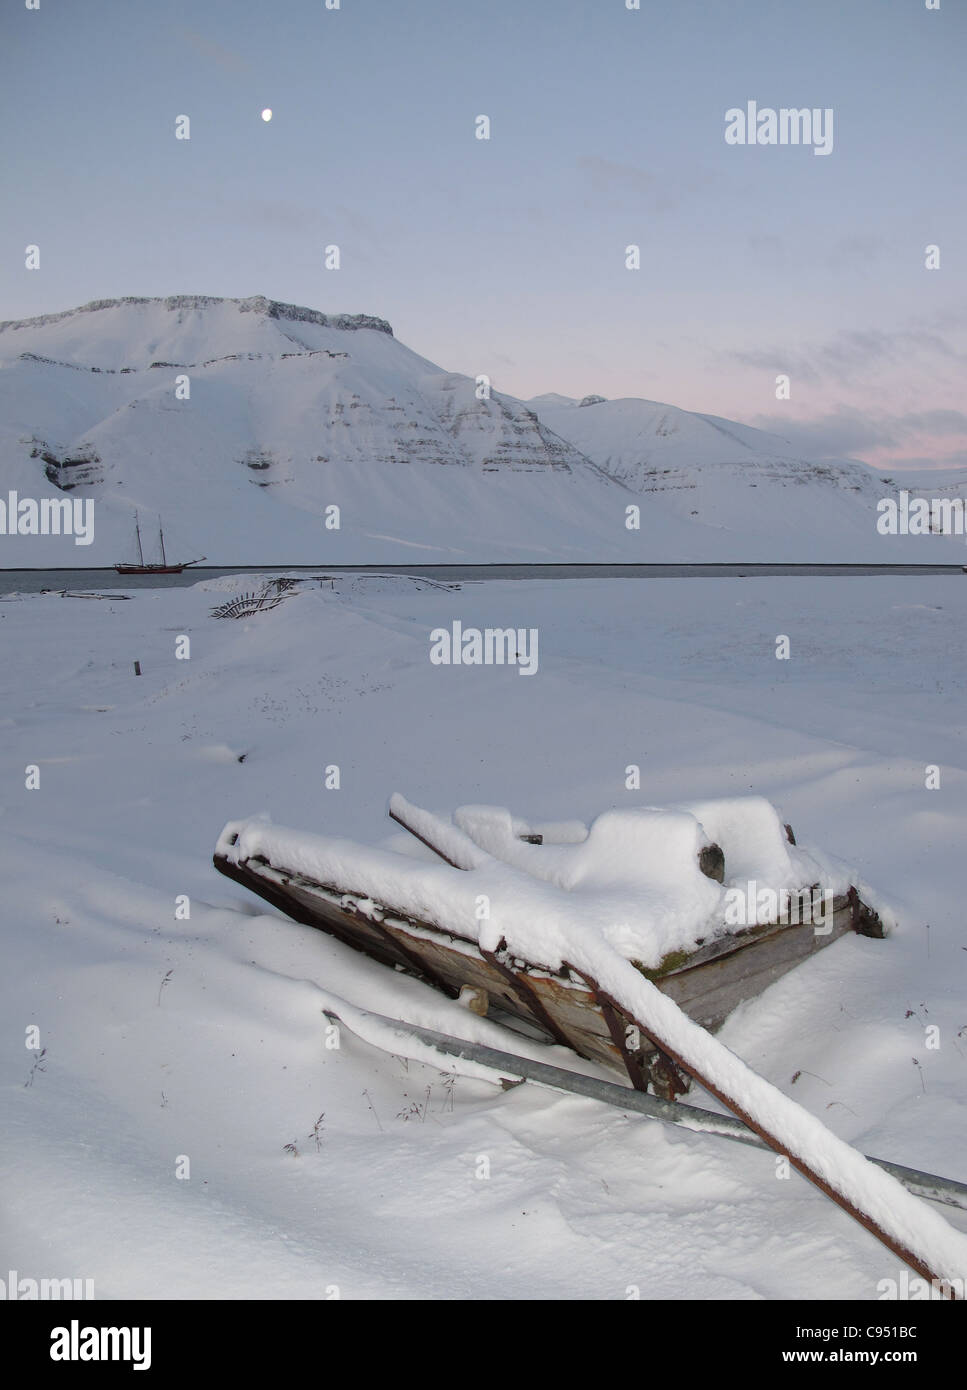 Remains of an old gypsum mine in Skansbukta with the sailing vessel 'Noorderlicht' in the background, Spitsbergen Stock Photo